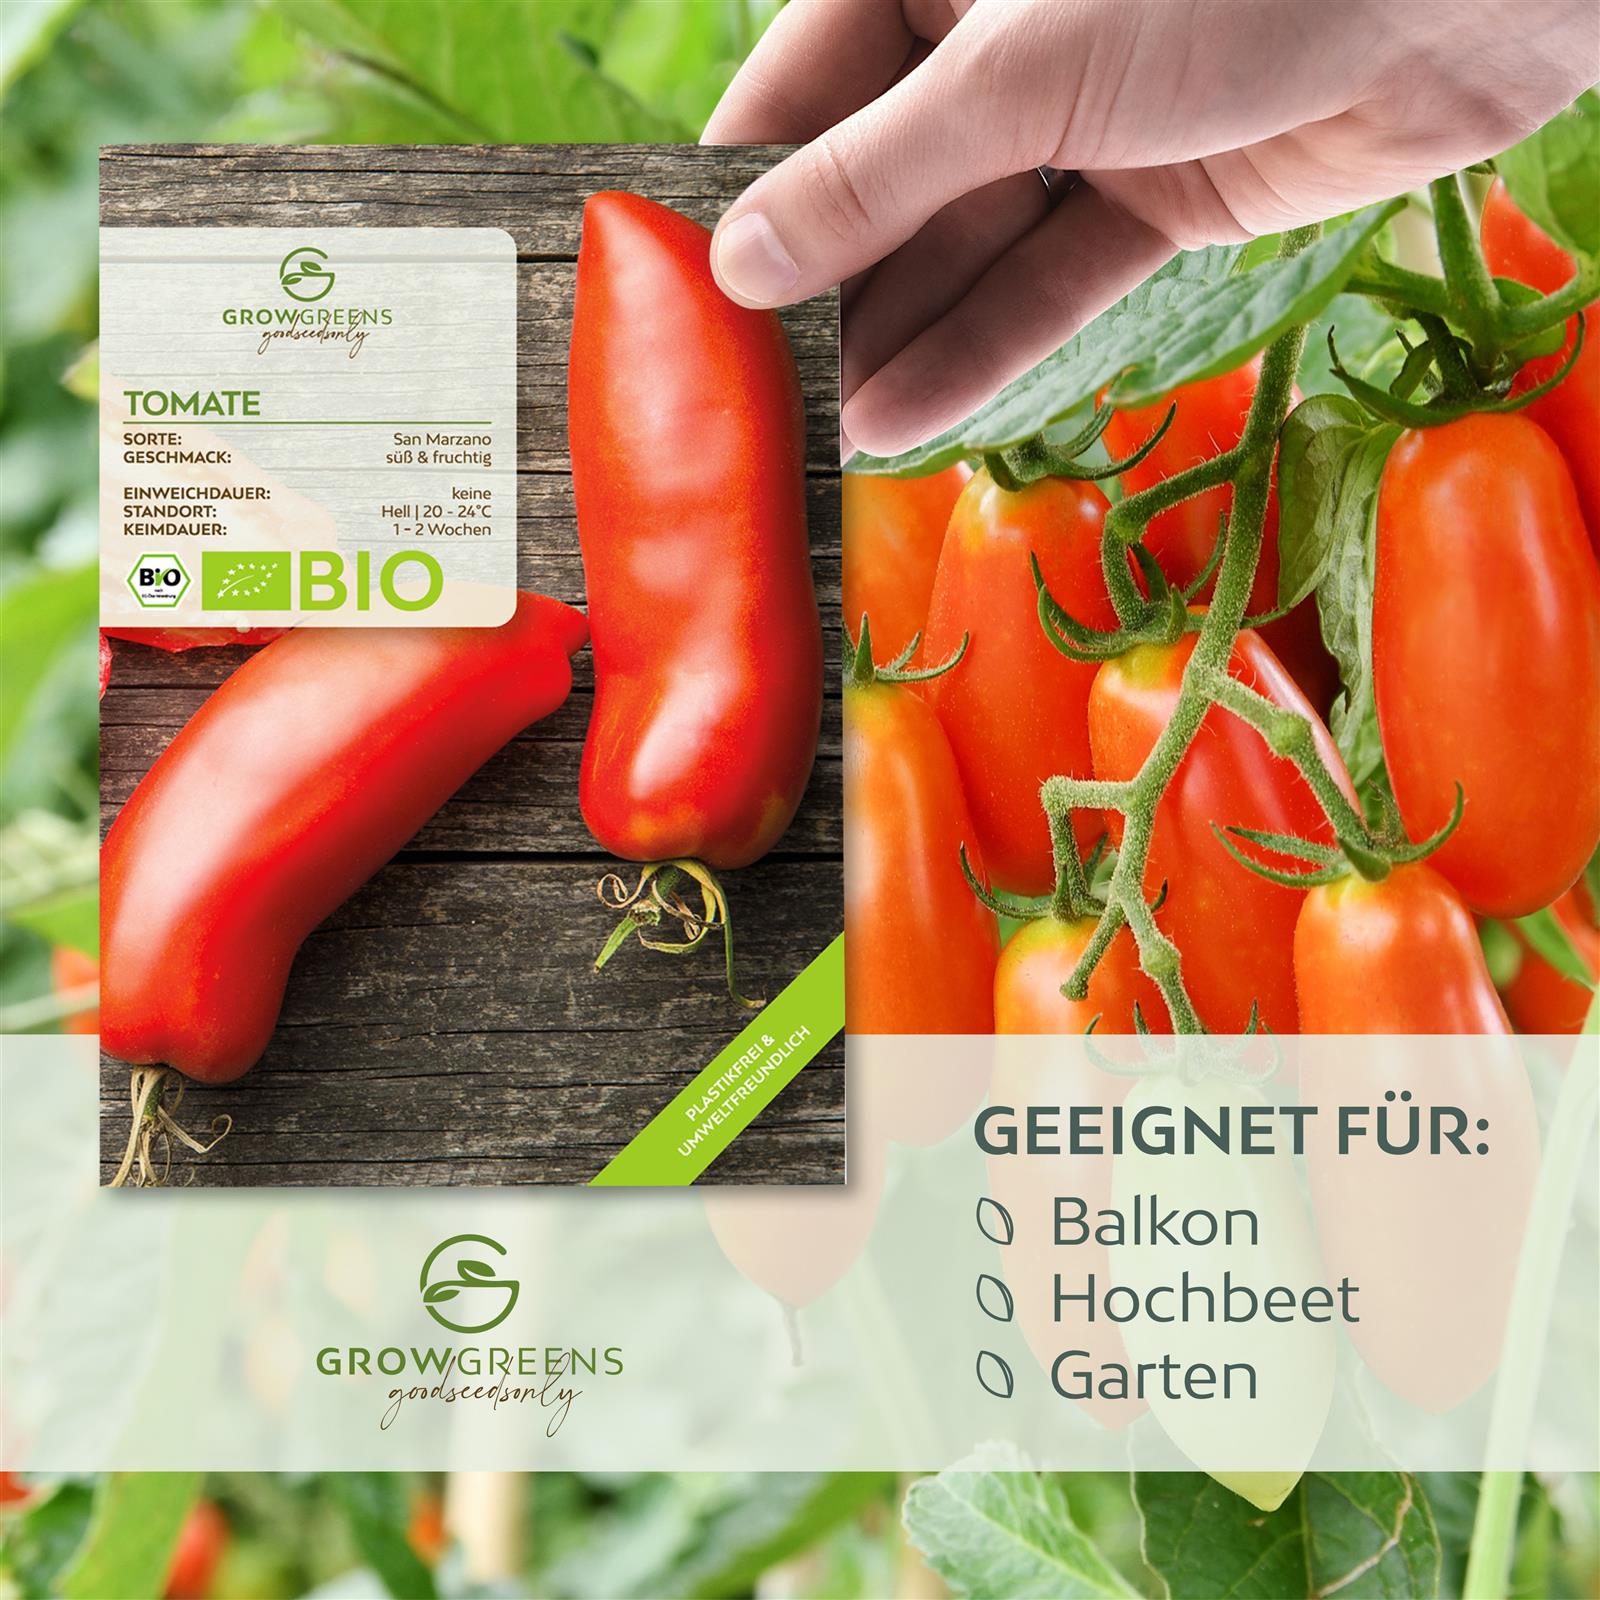 BIO Tomatensamen (San Marzano) - Tomaten Saatgut aus biologischem Anbau (10 Korn)